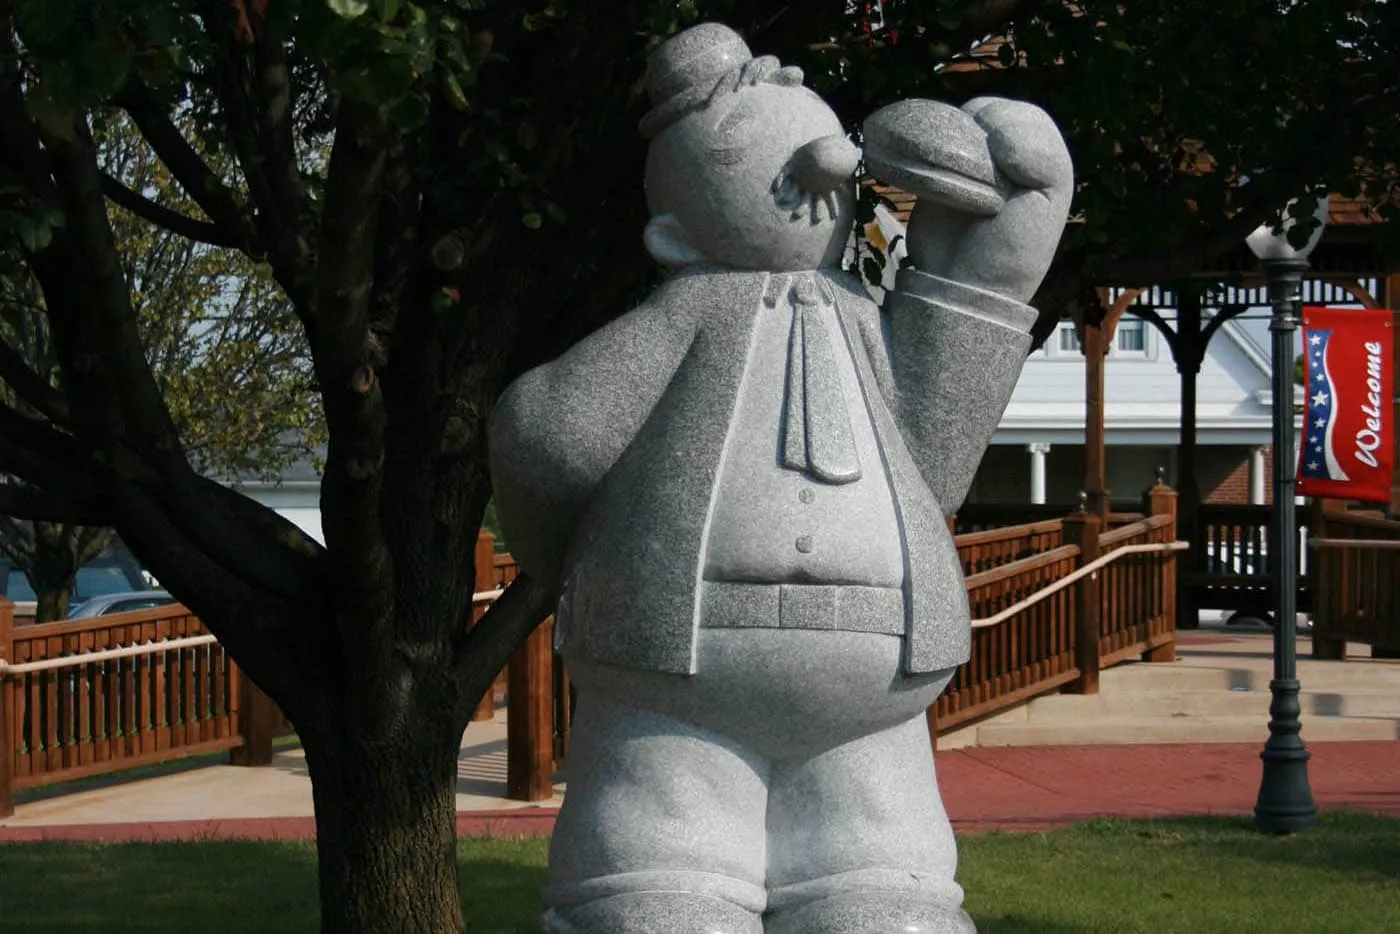 Popeye's Wimpy Statue in Chester, Illinois